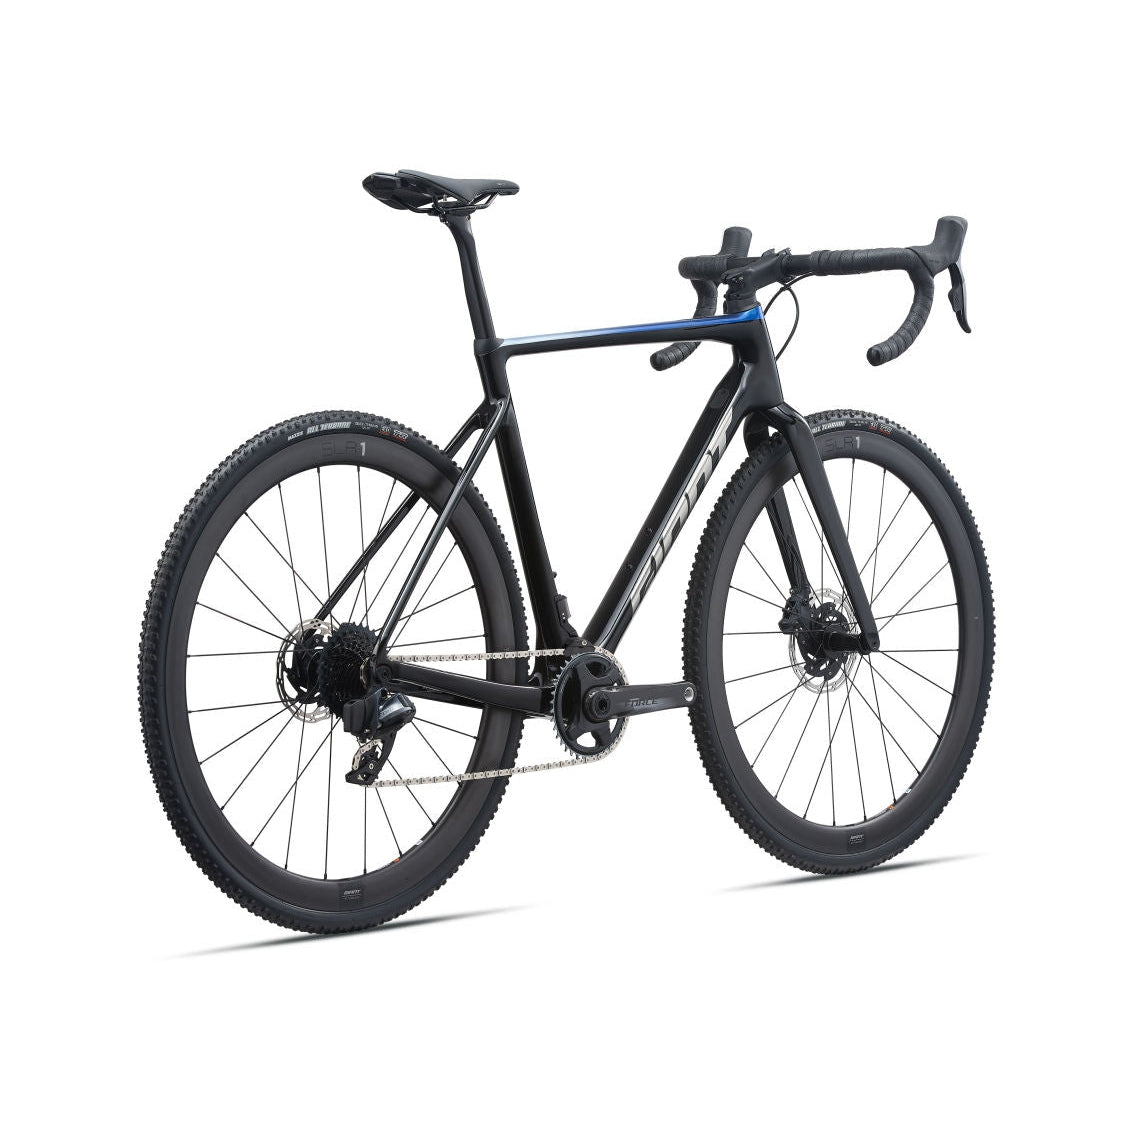 Giant TCX Advanced Pro 0 Gravel Road Bike - Bikes - Bicycle Warehouse